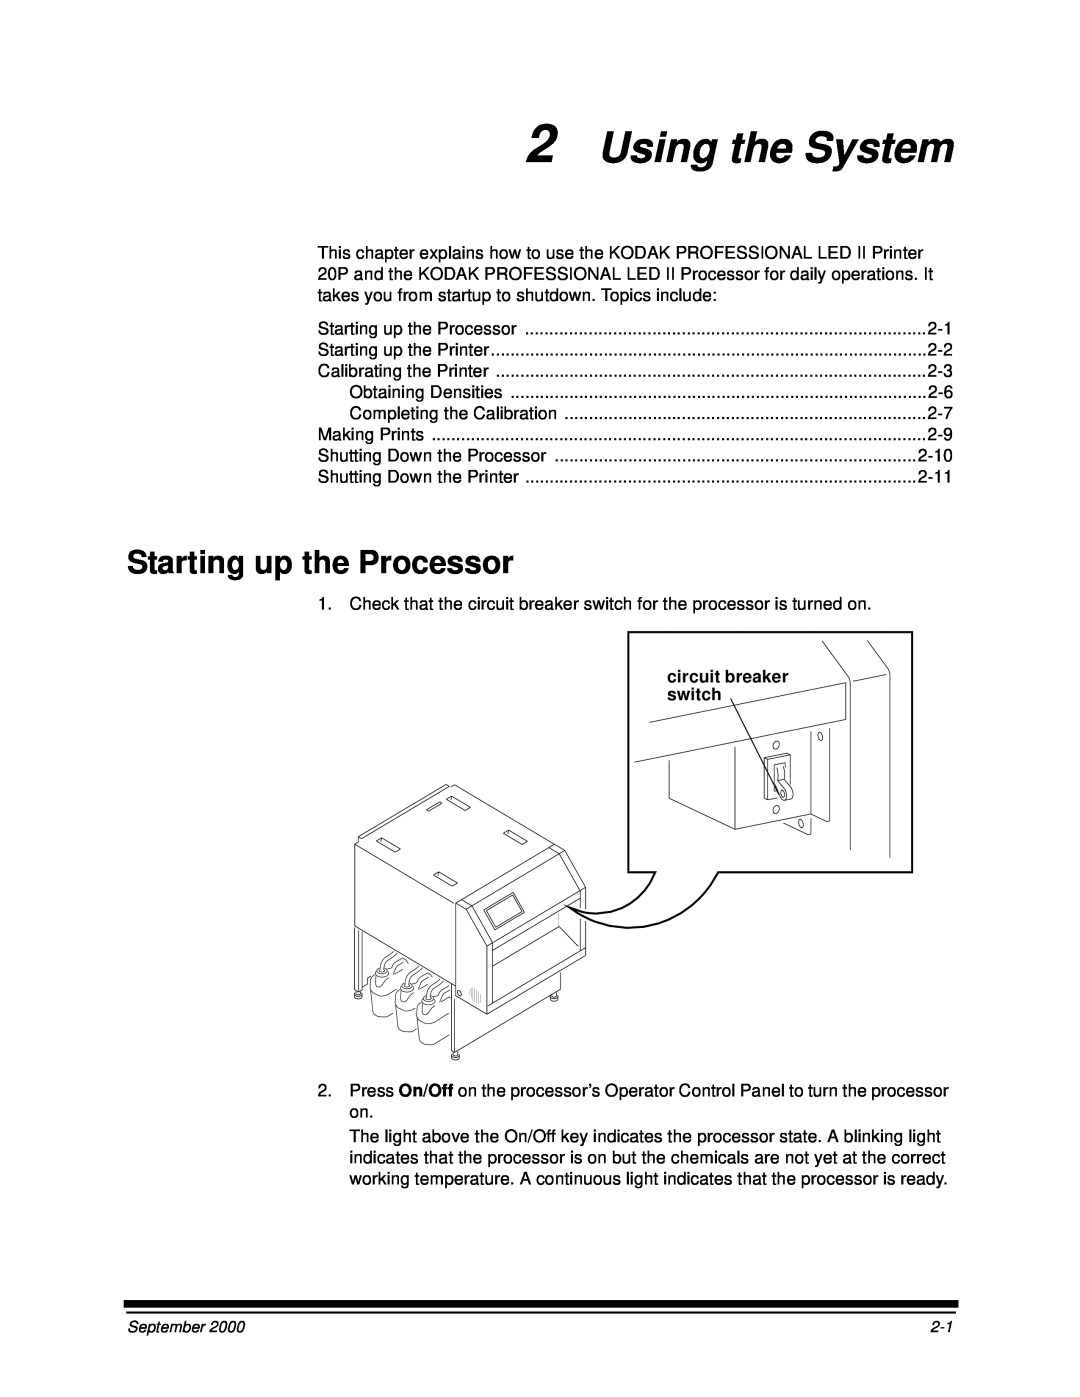 Kodak 20P manual Using the System, Starting up the Processor, circuit breaker switch 